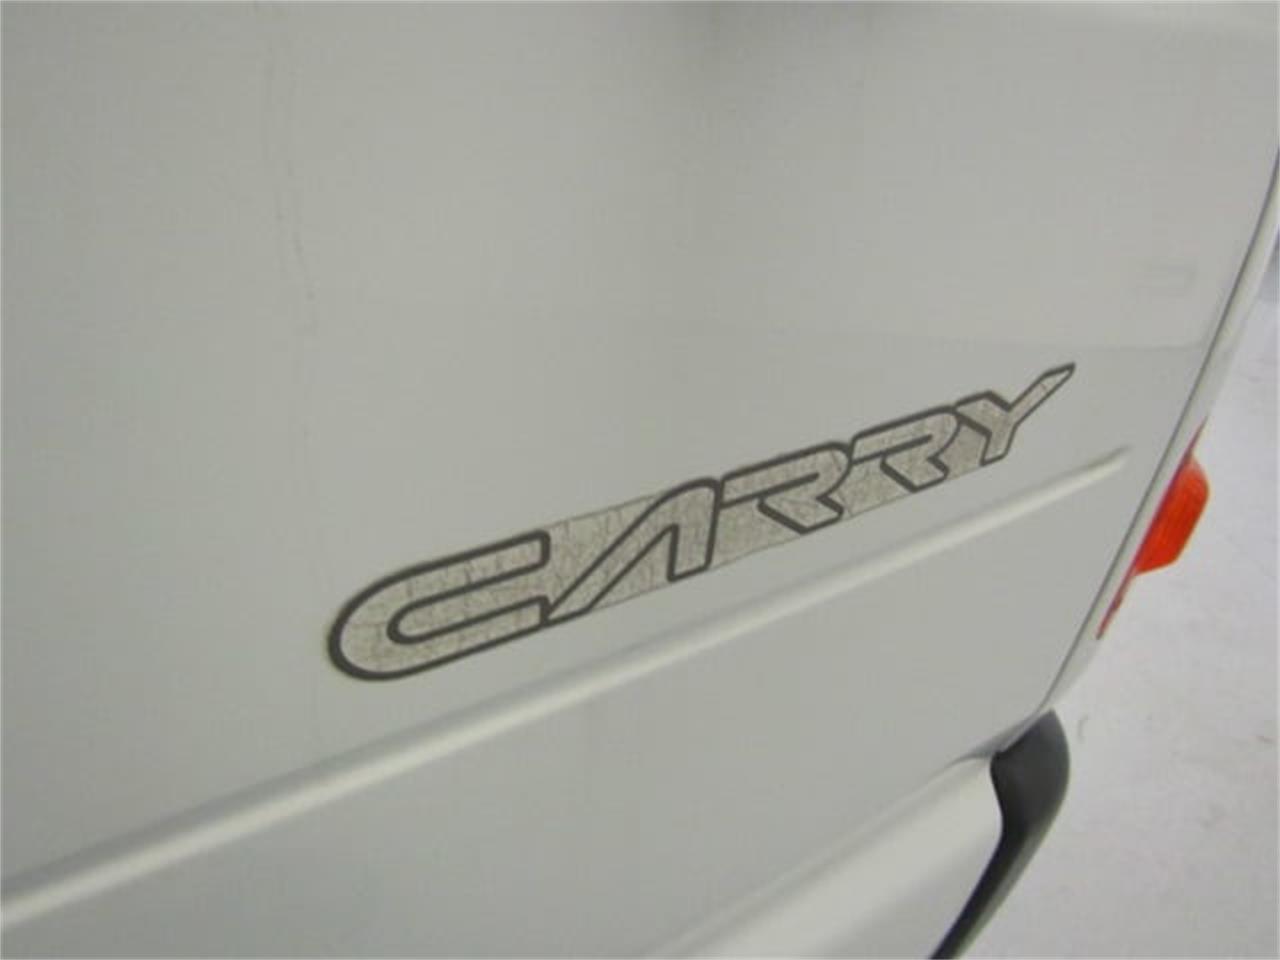 1991 Suzuki Carry for sale in Christiansburg, VA – photo 42